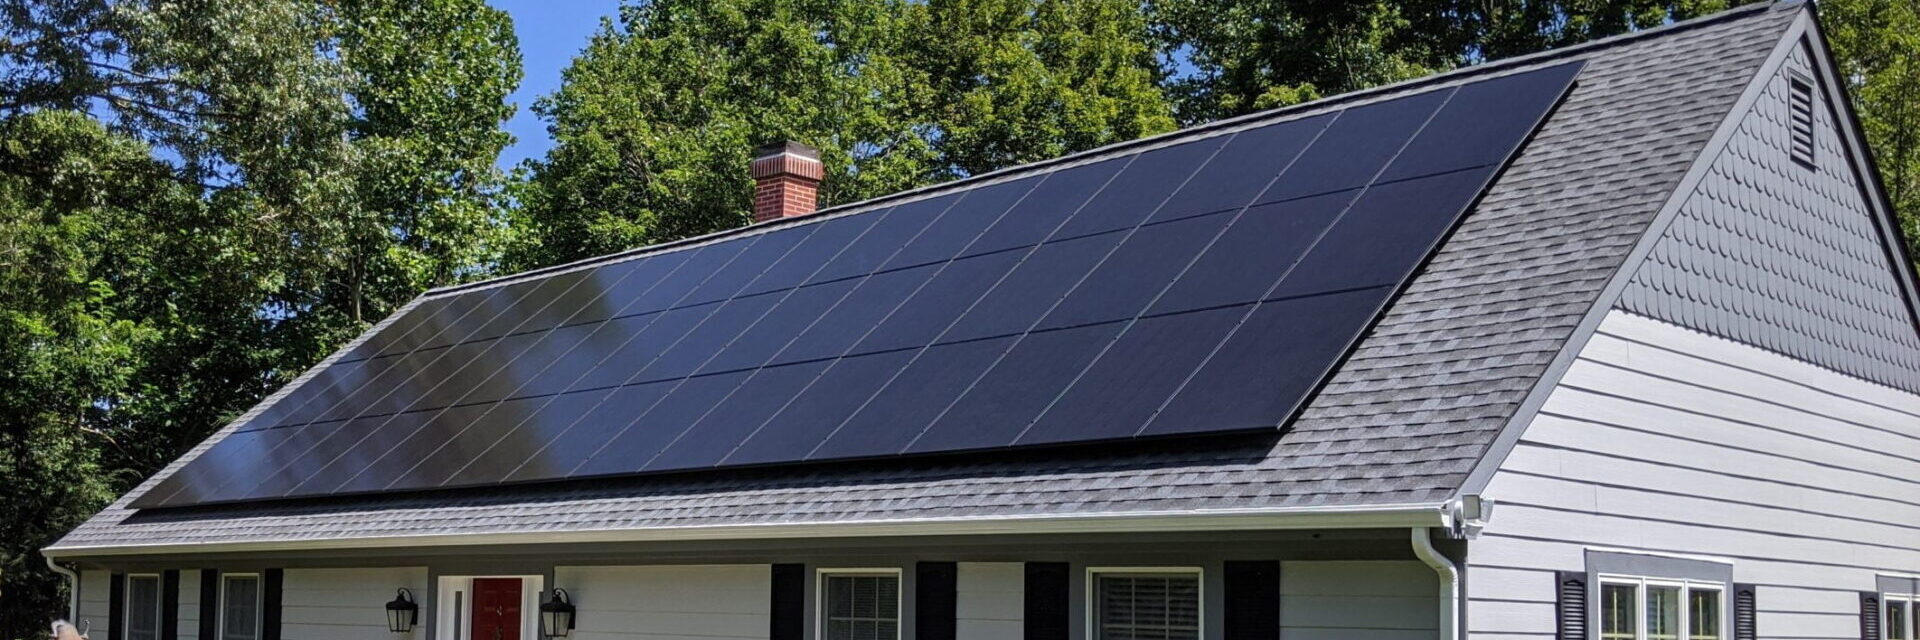 Solar panels installed on roof in Richmond Virginia